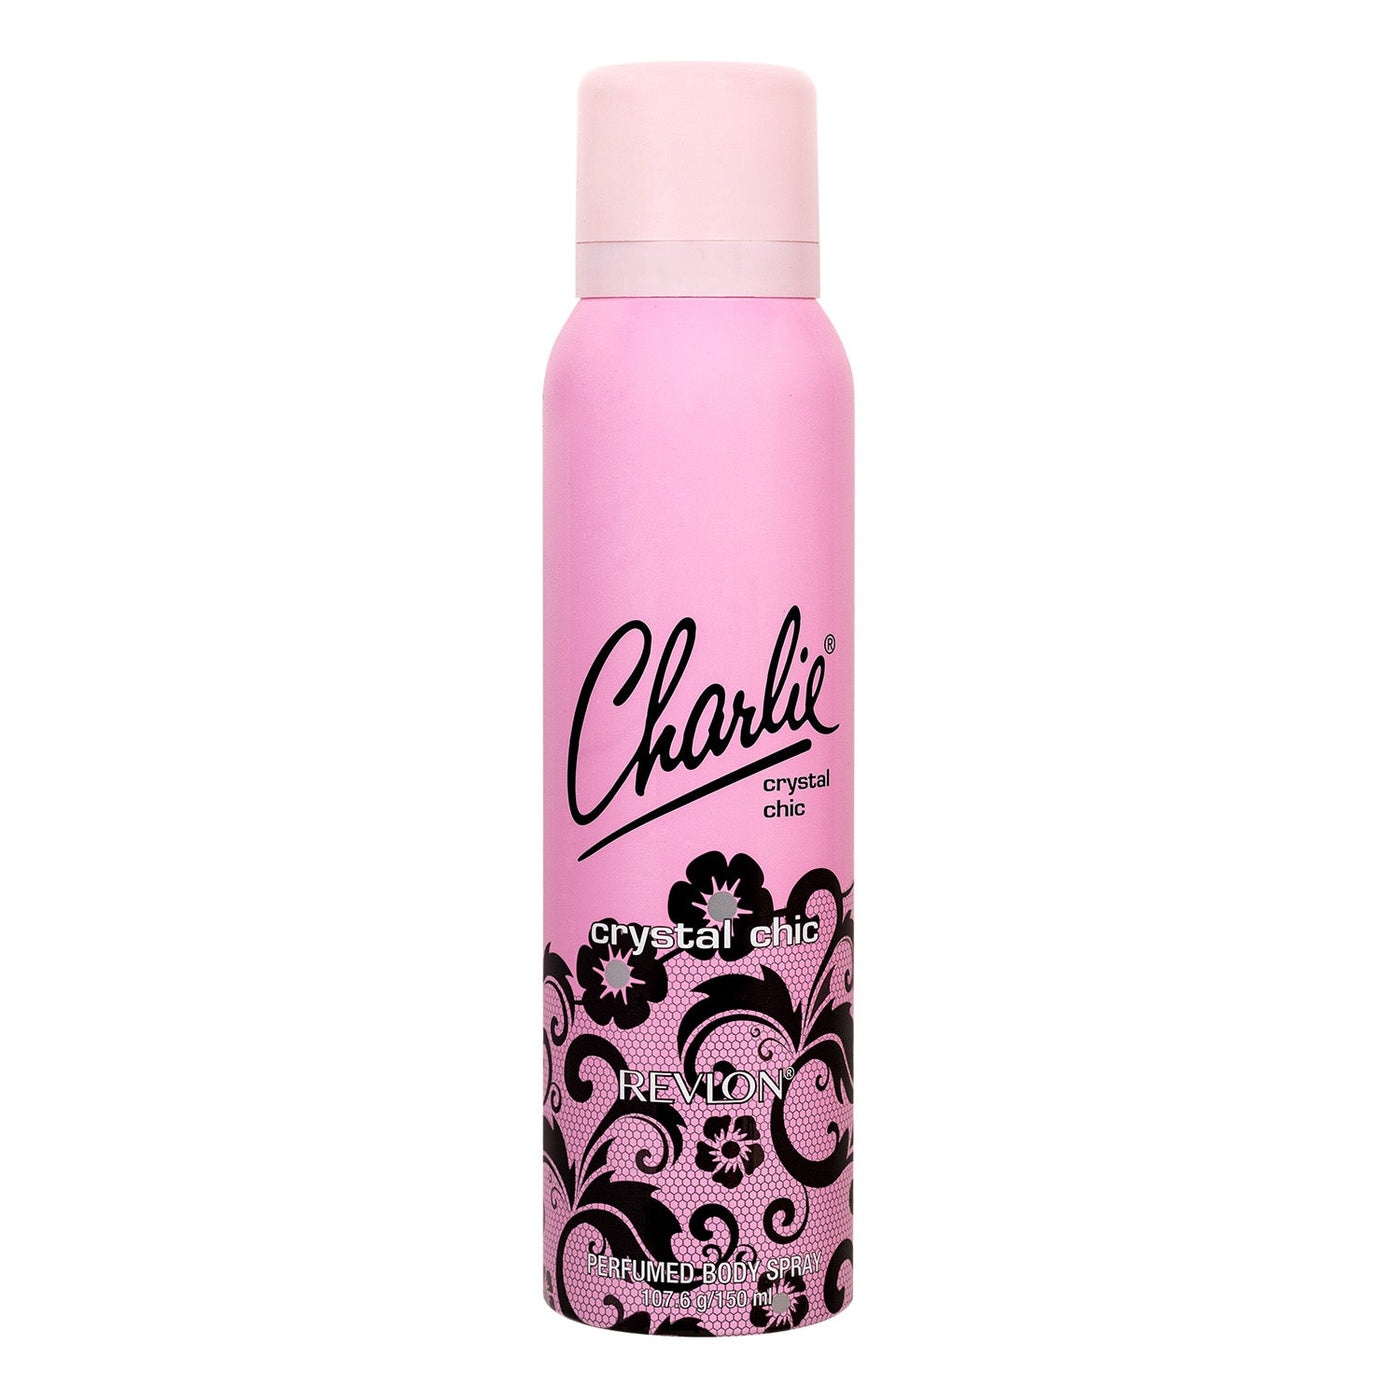 » Charlie Crystal Chic Perfumed Body Spray (100% off)